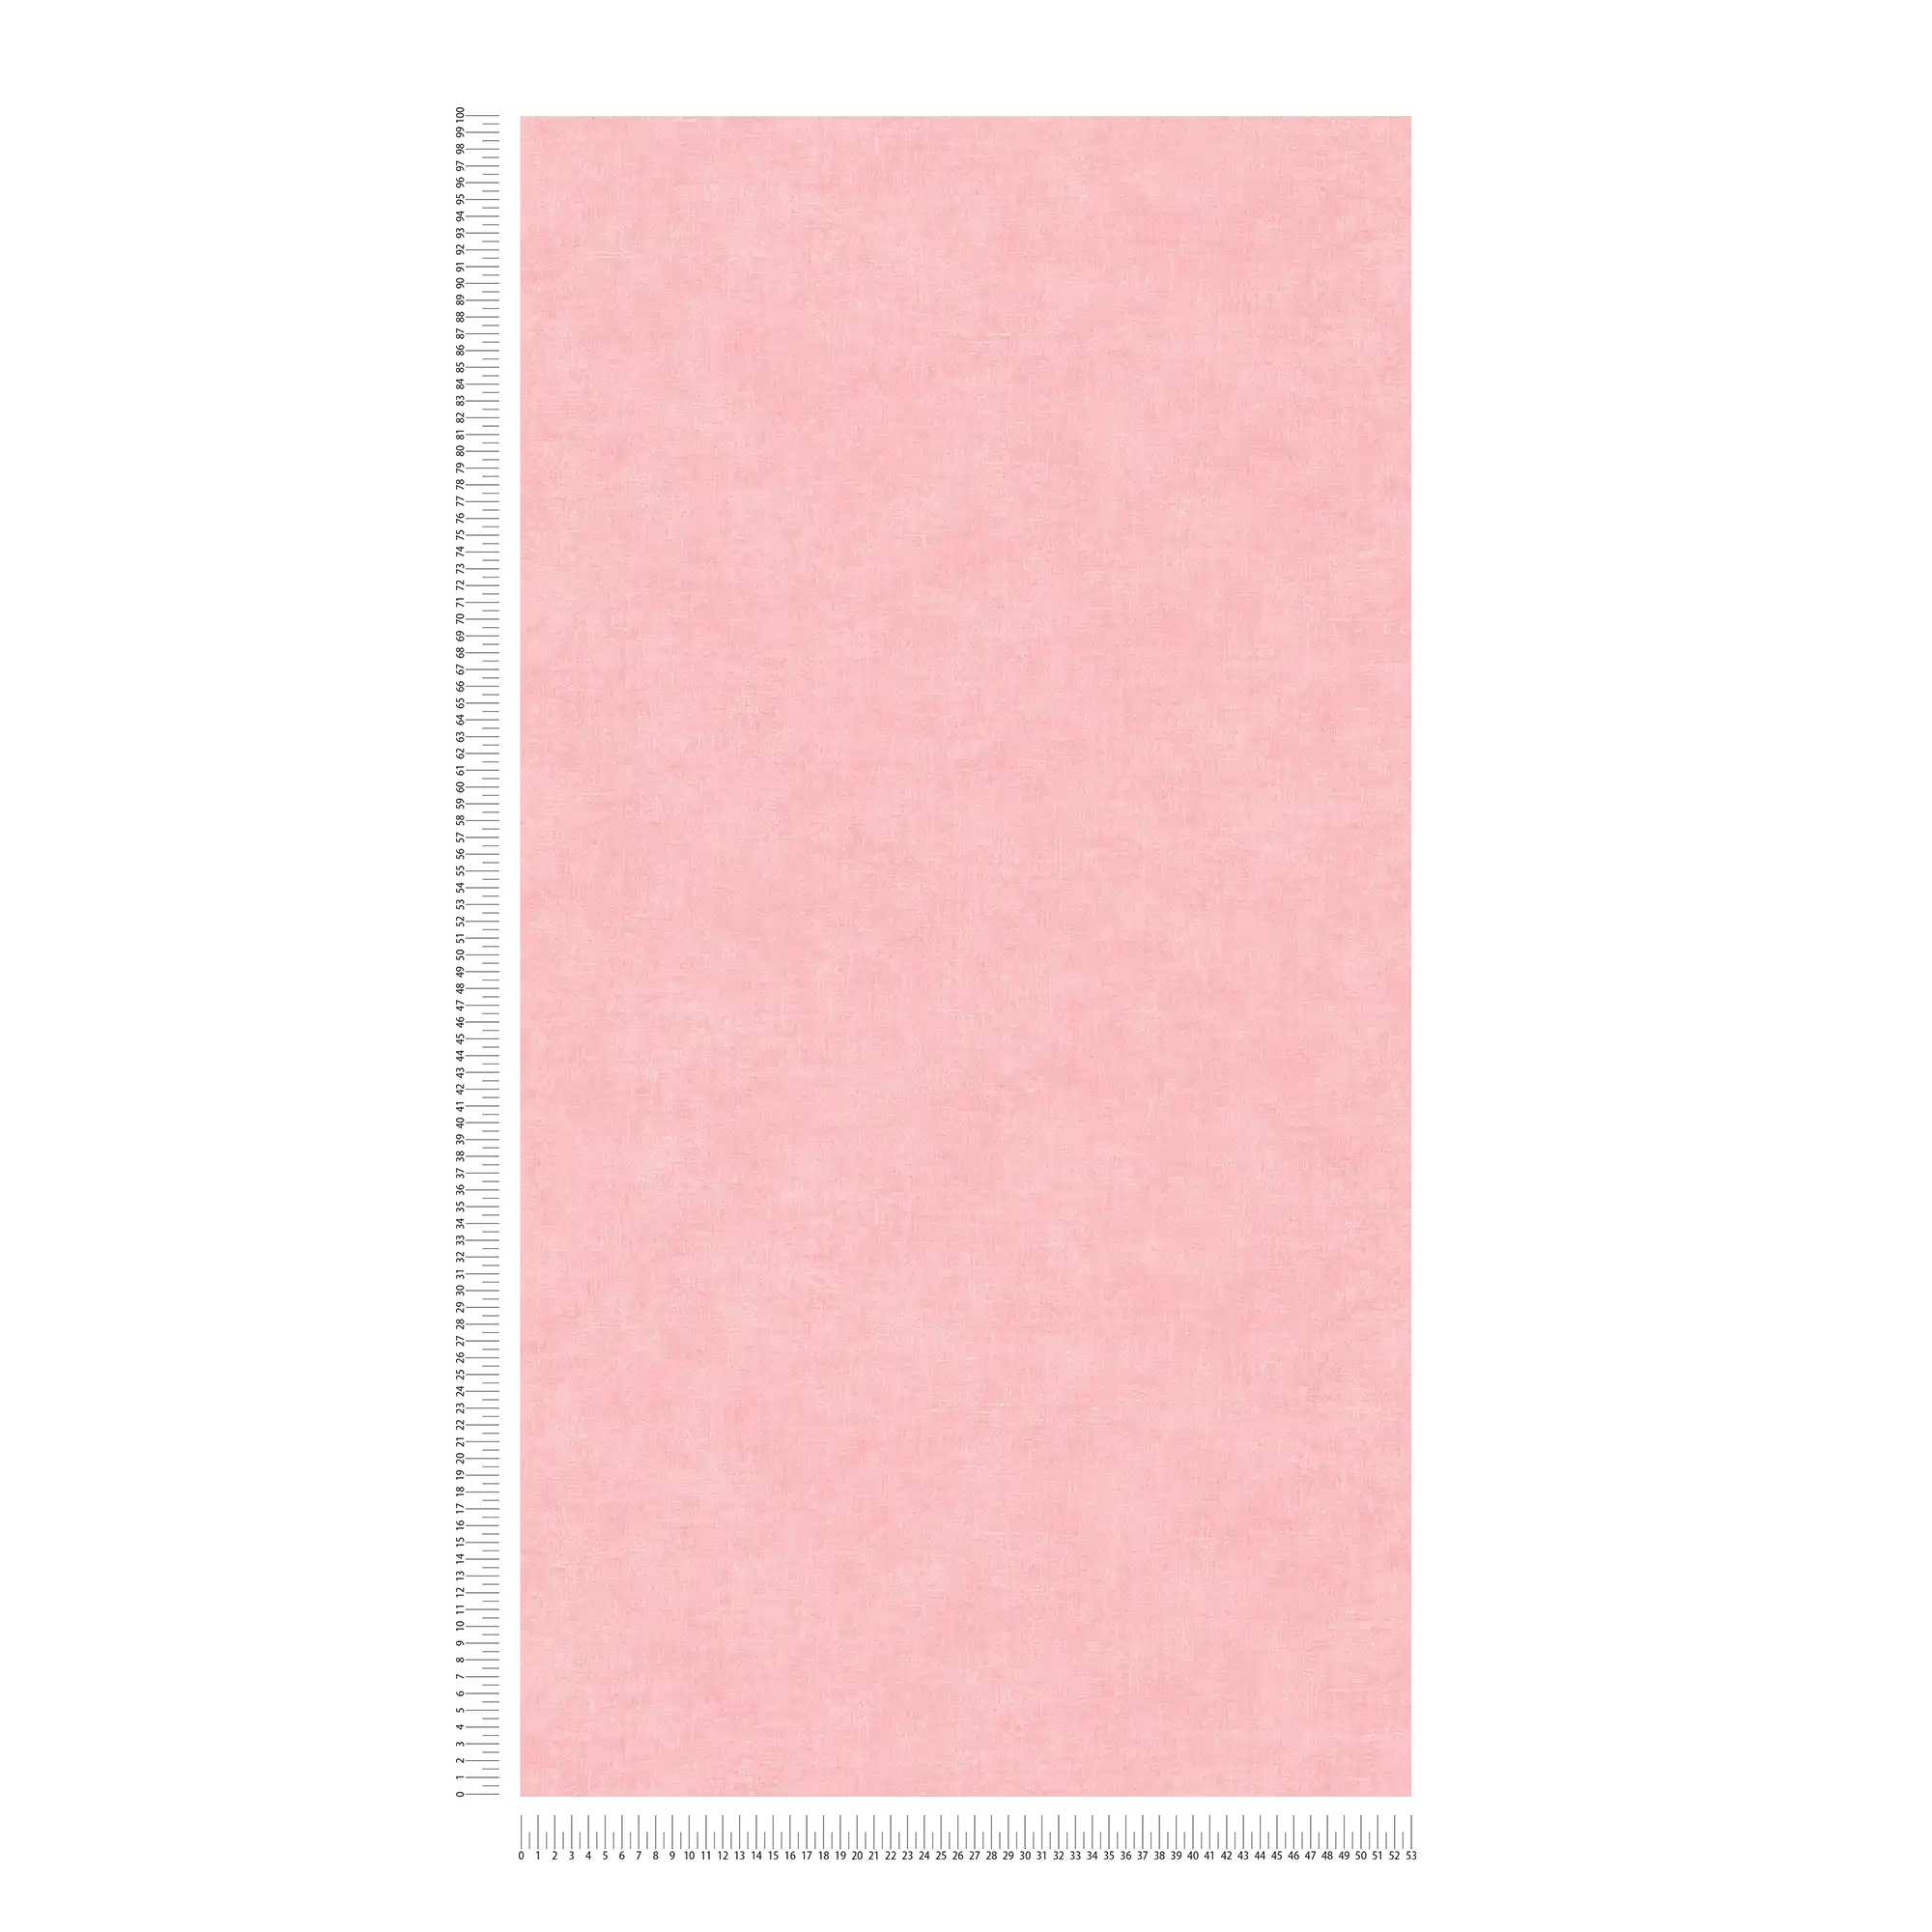             Papel pintado rosa liso y mate con textura
        